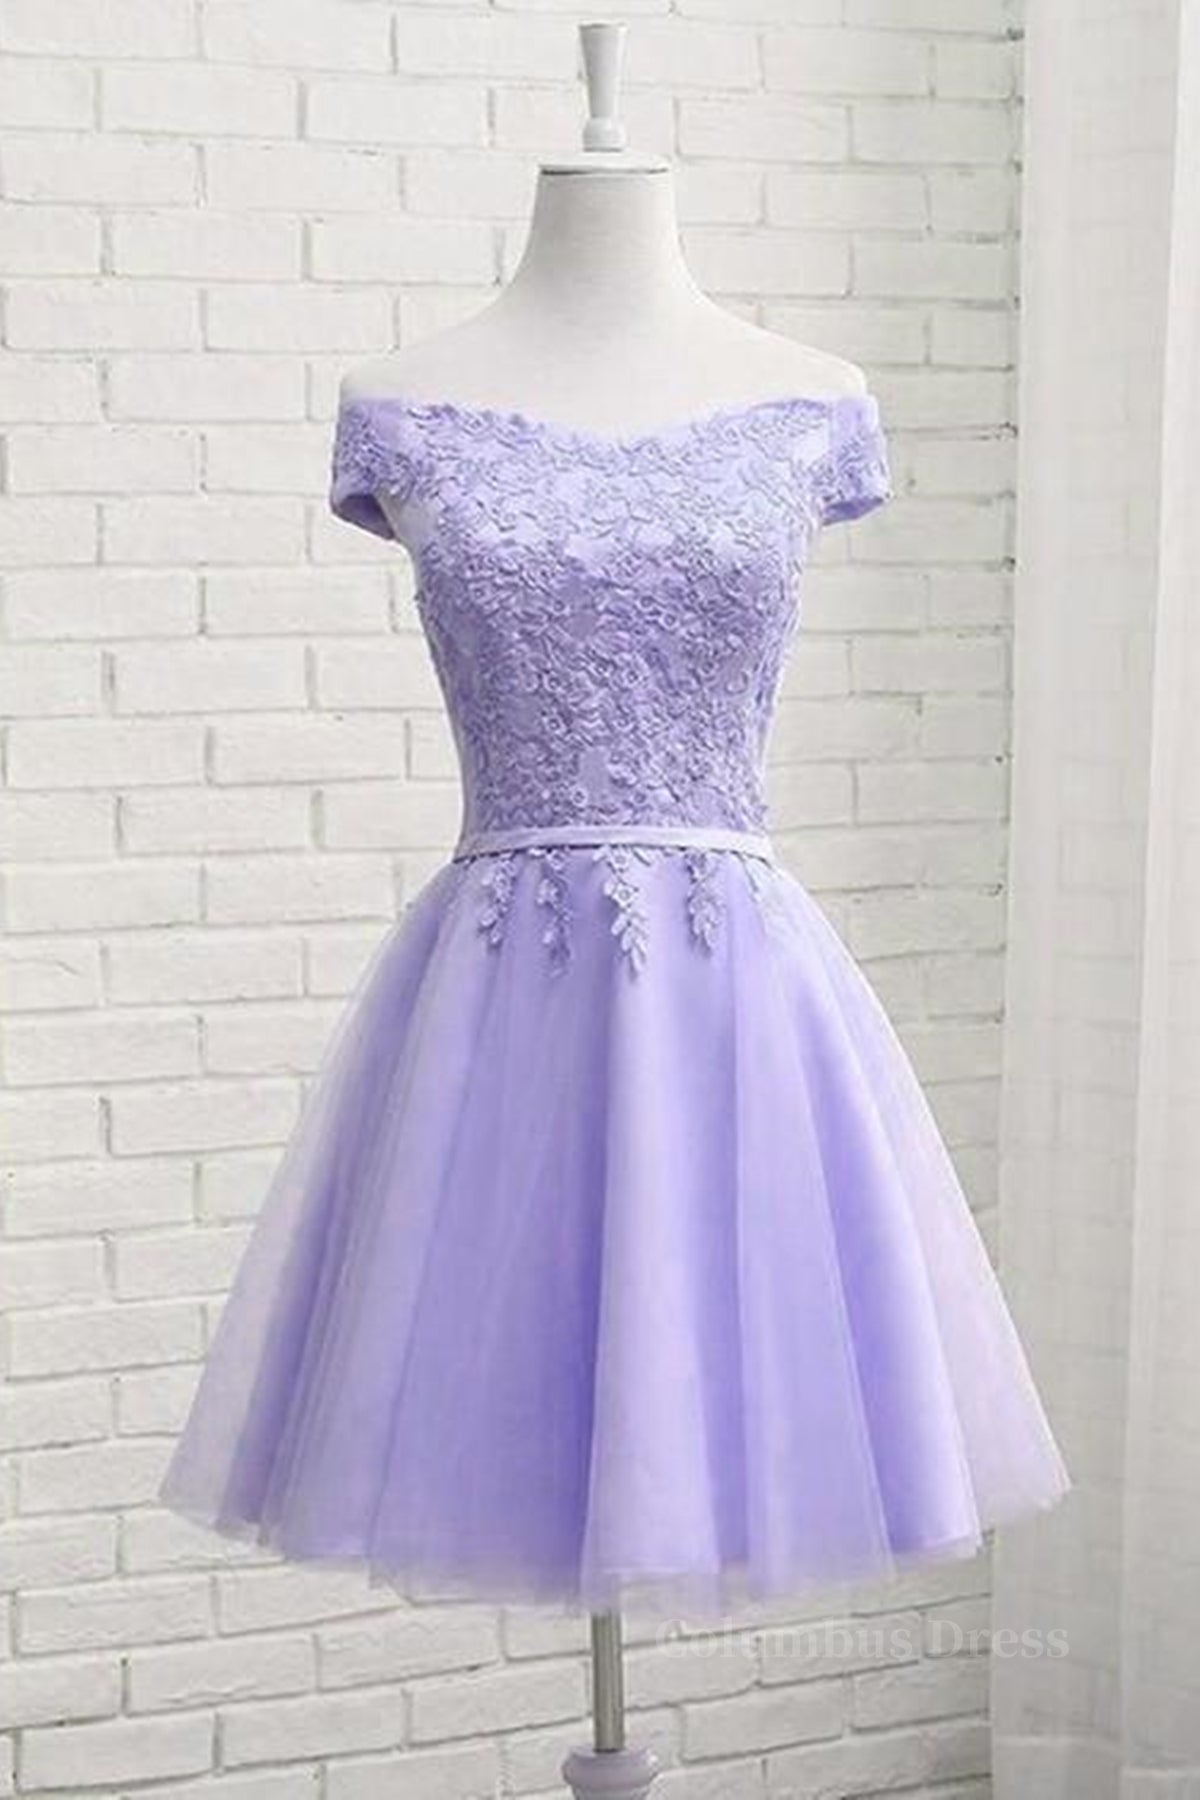 Off Shoulder Purple Lace Short Corset Prom Dress, Lilac Lace Corset Homecoming Dress, Short Purple Corset Formal Evening Dress outfit, Bridesmaids Dresses Winter Wedding